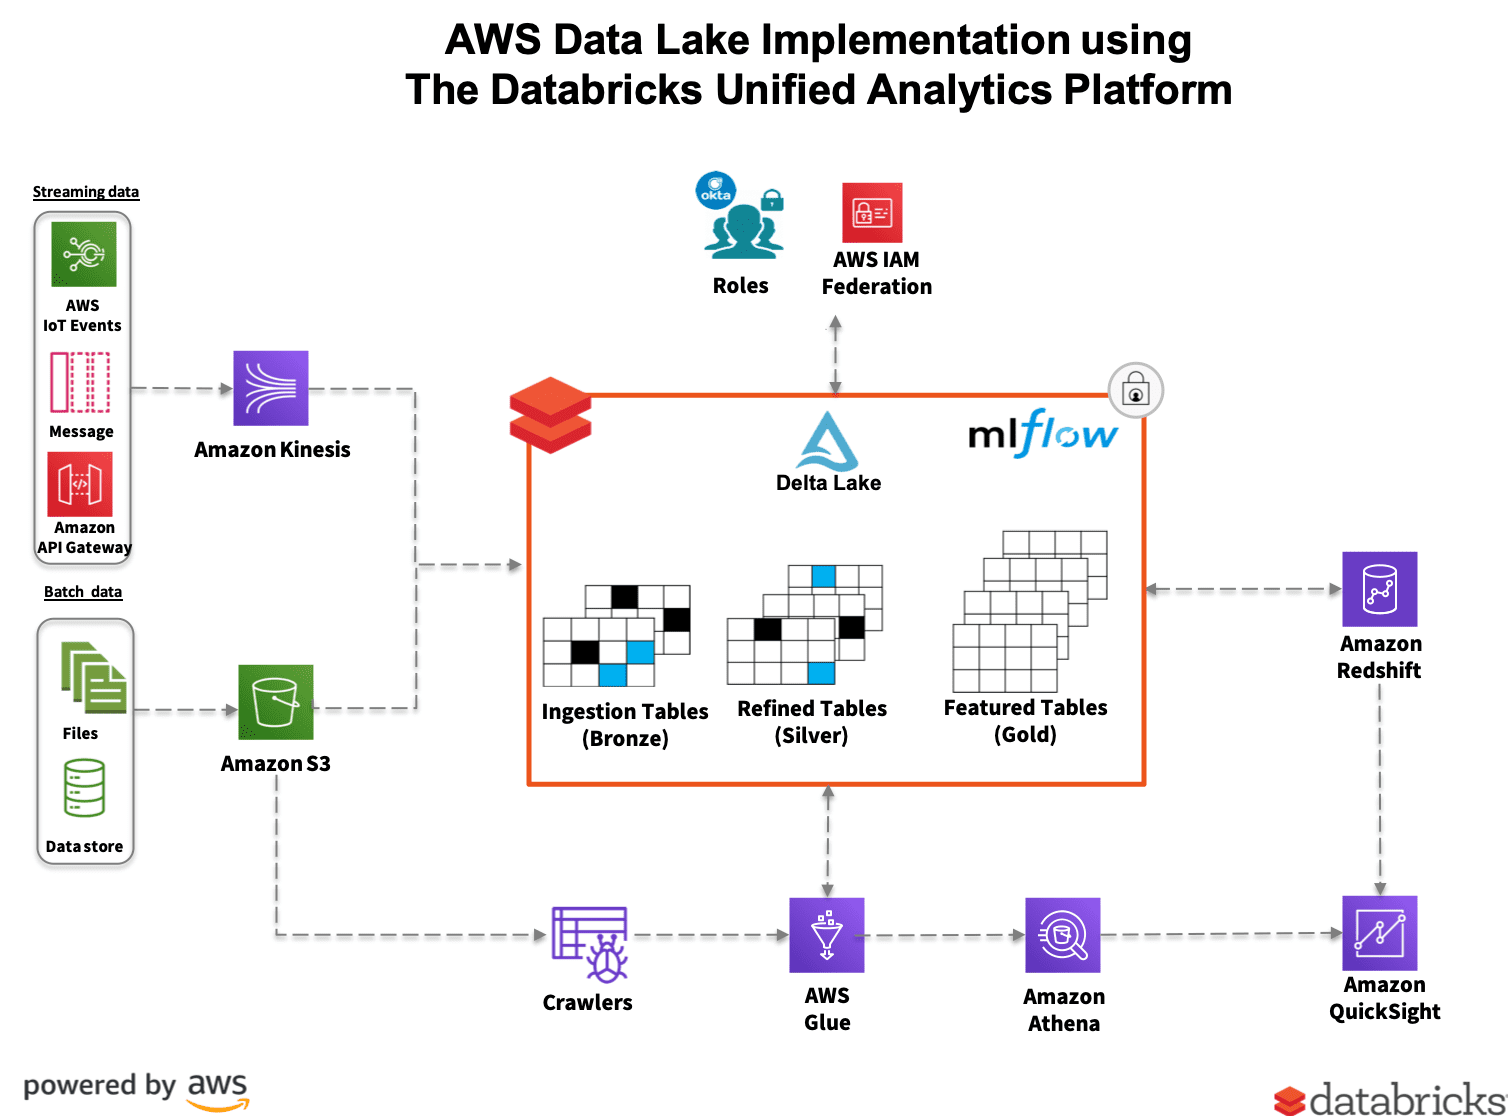 AWD Data Lake implementation using the Databricks Unified Analytics Platform.